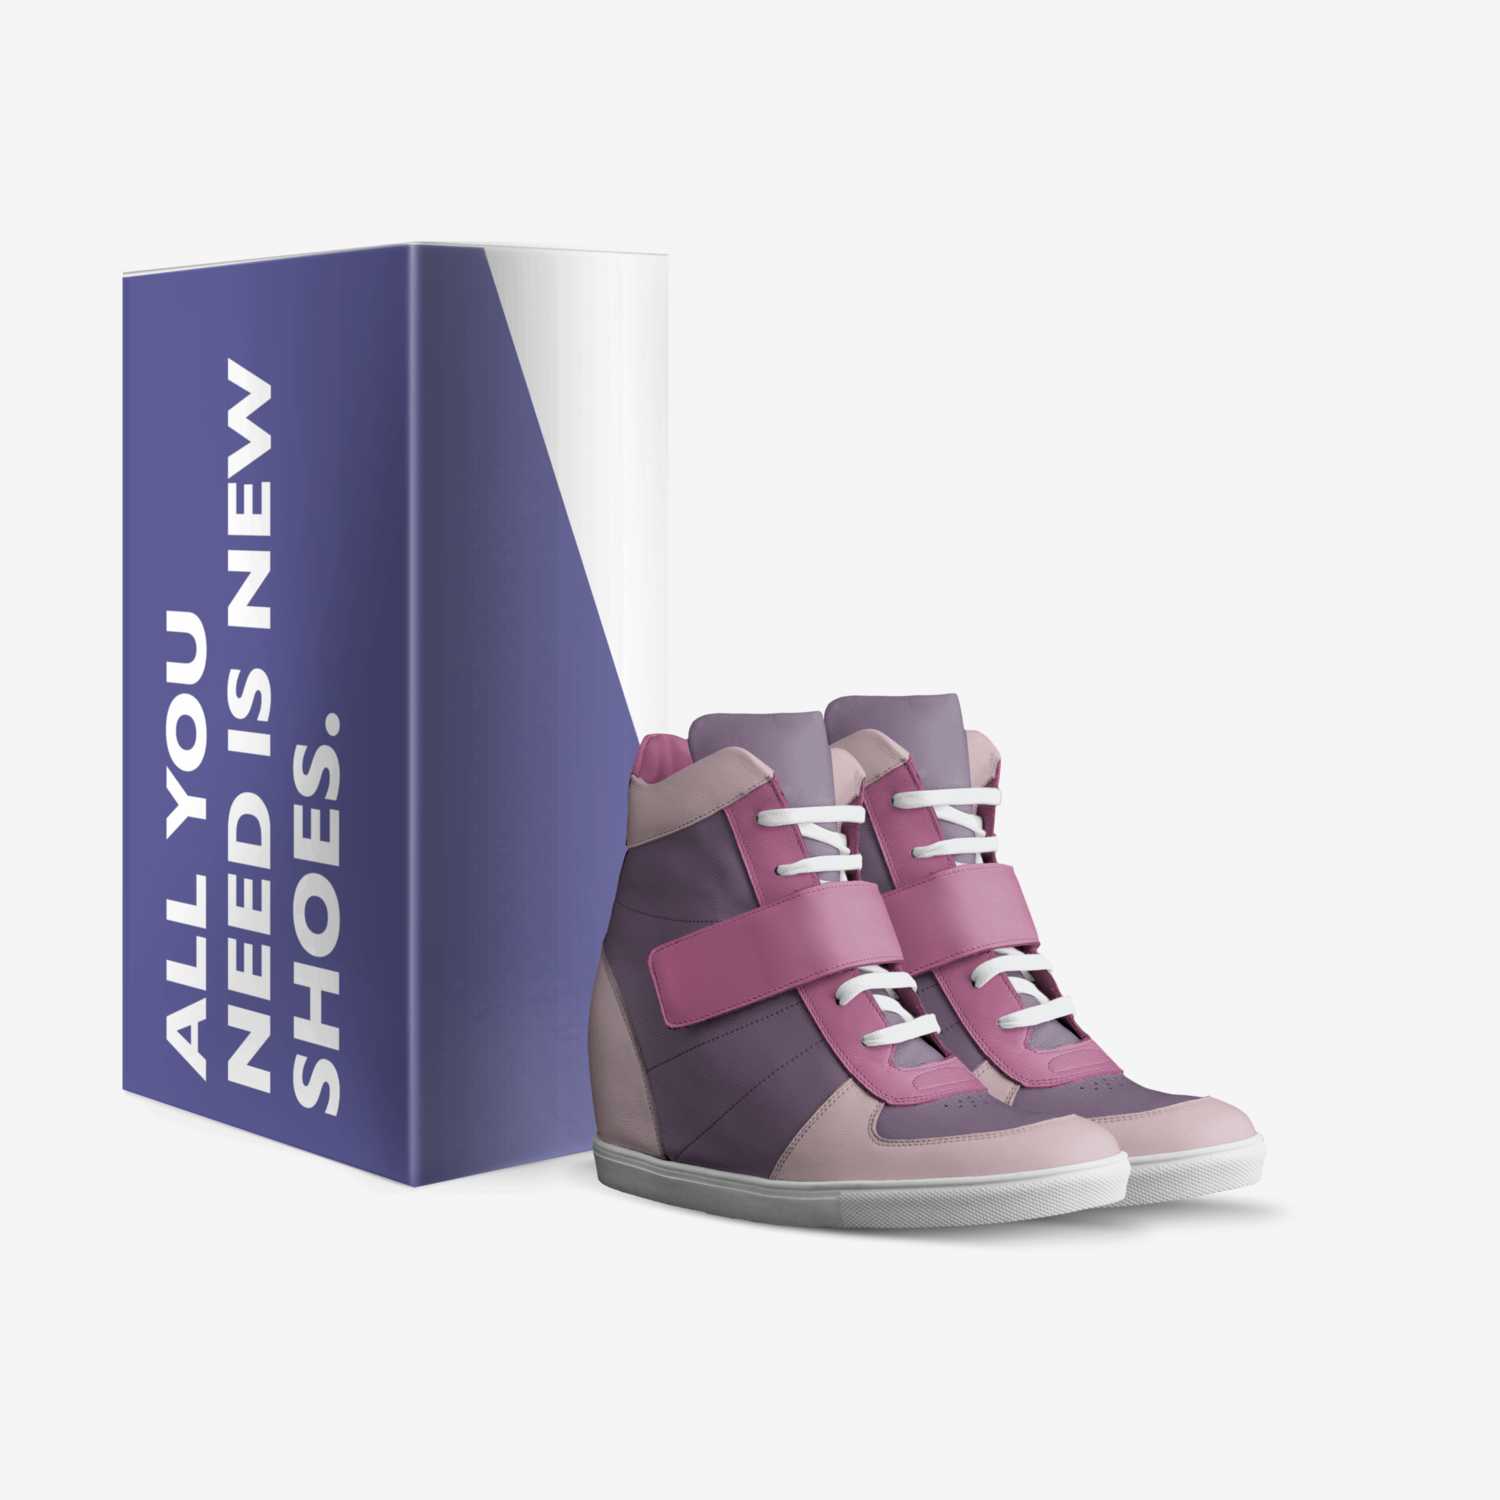 Vida custom made in Italy shoes by Nadia Fabbietti | Box view